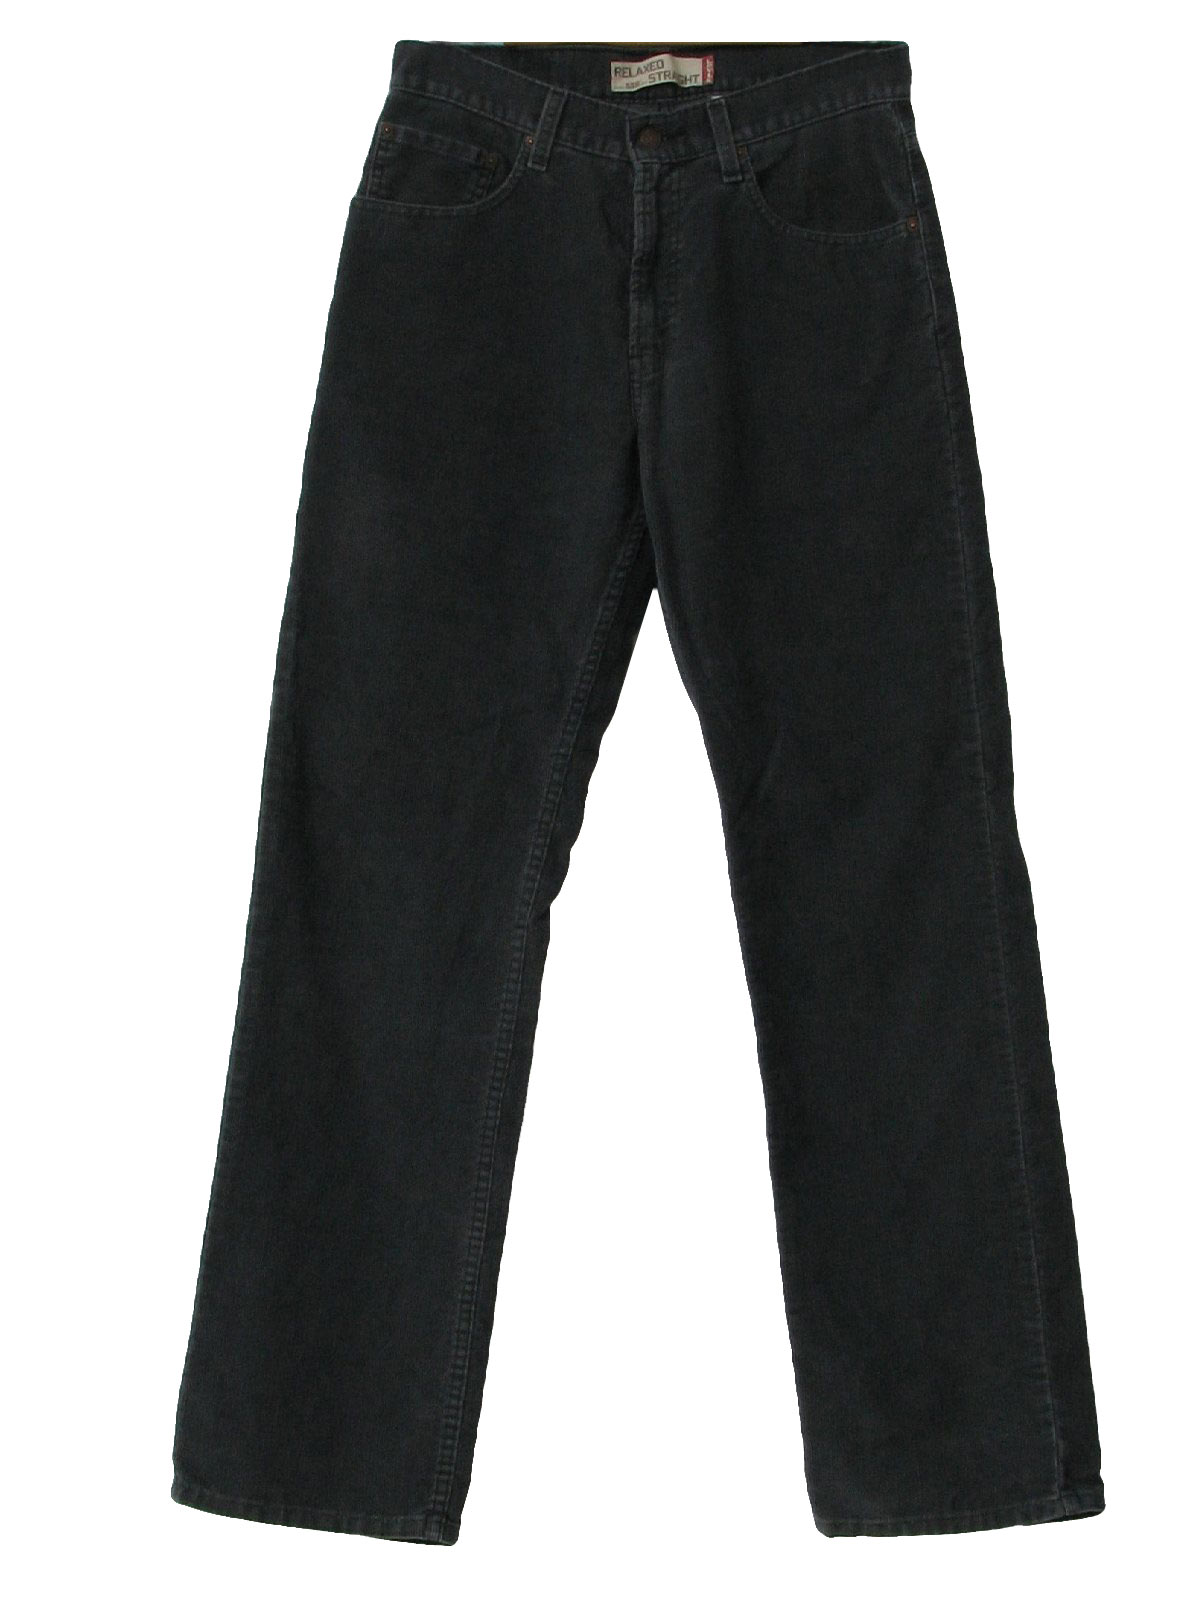 90s Pants (Levis): 90s -Levis- Mens charcoal grey cotton polyester ...